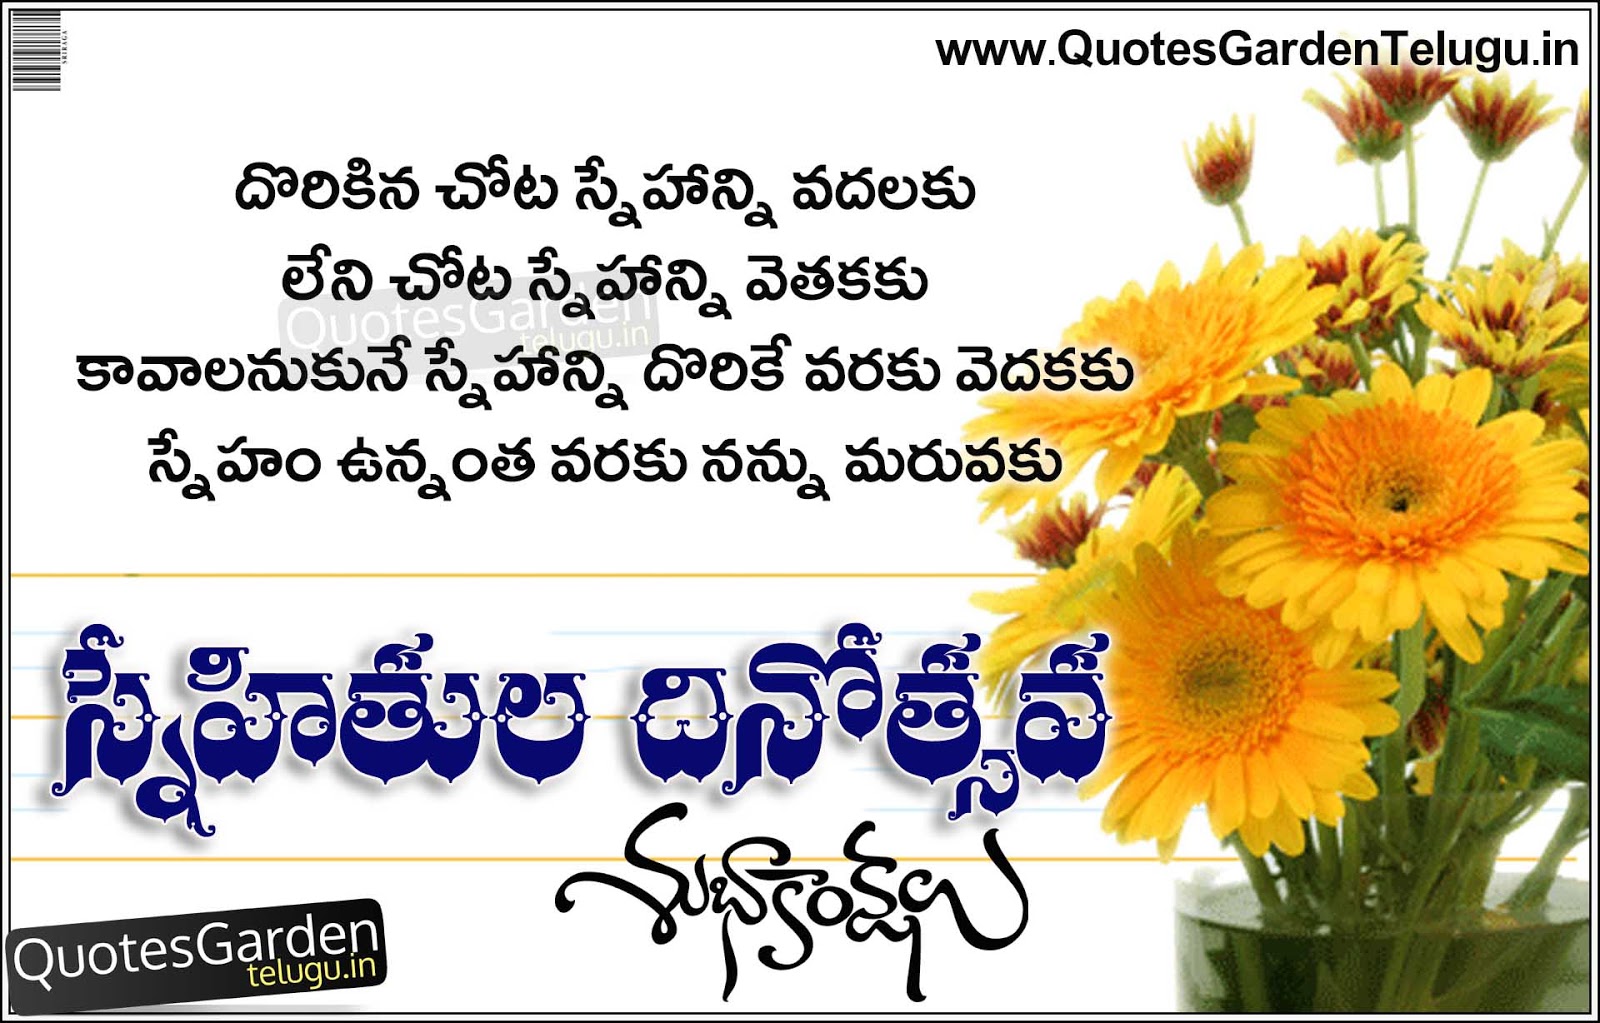 Happy Friendship Day 2016 Telugu Greetings 2030 | QUOTES GARDEN ...